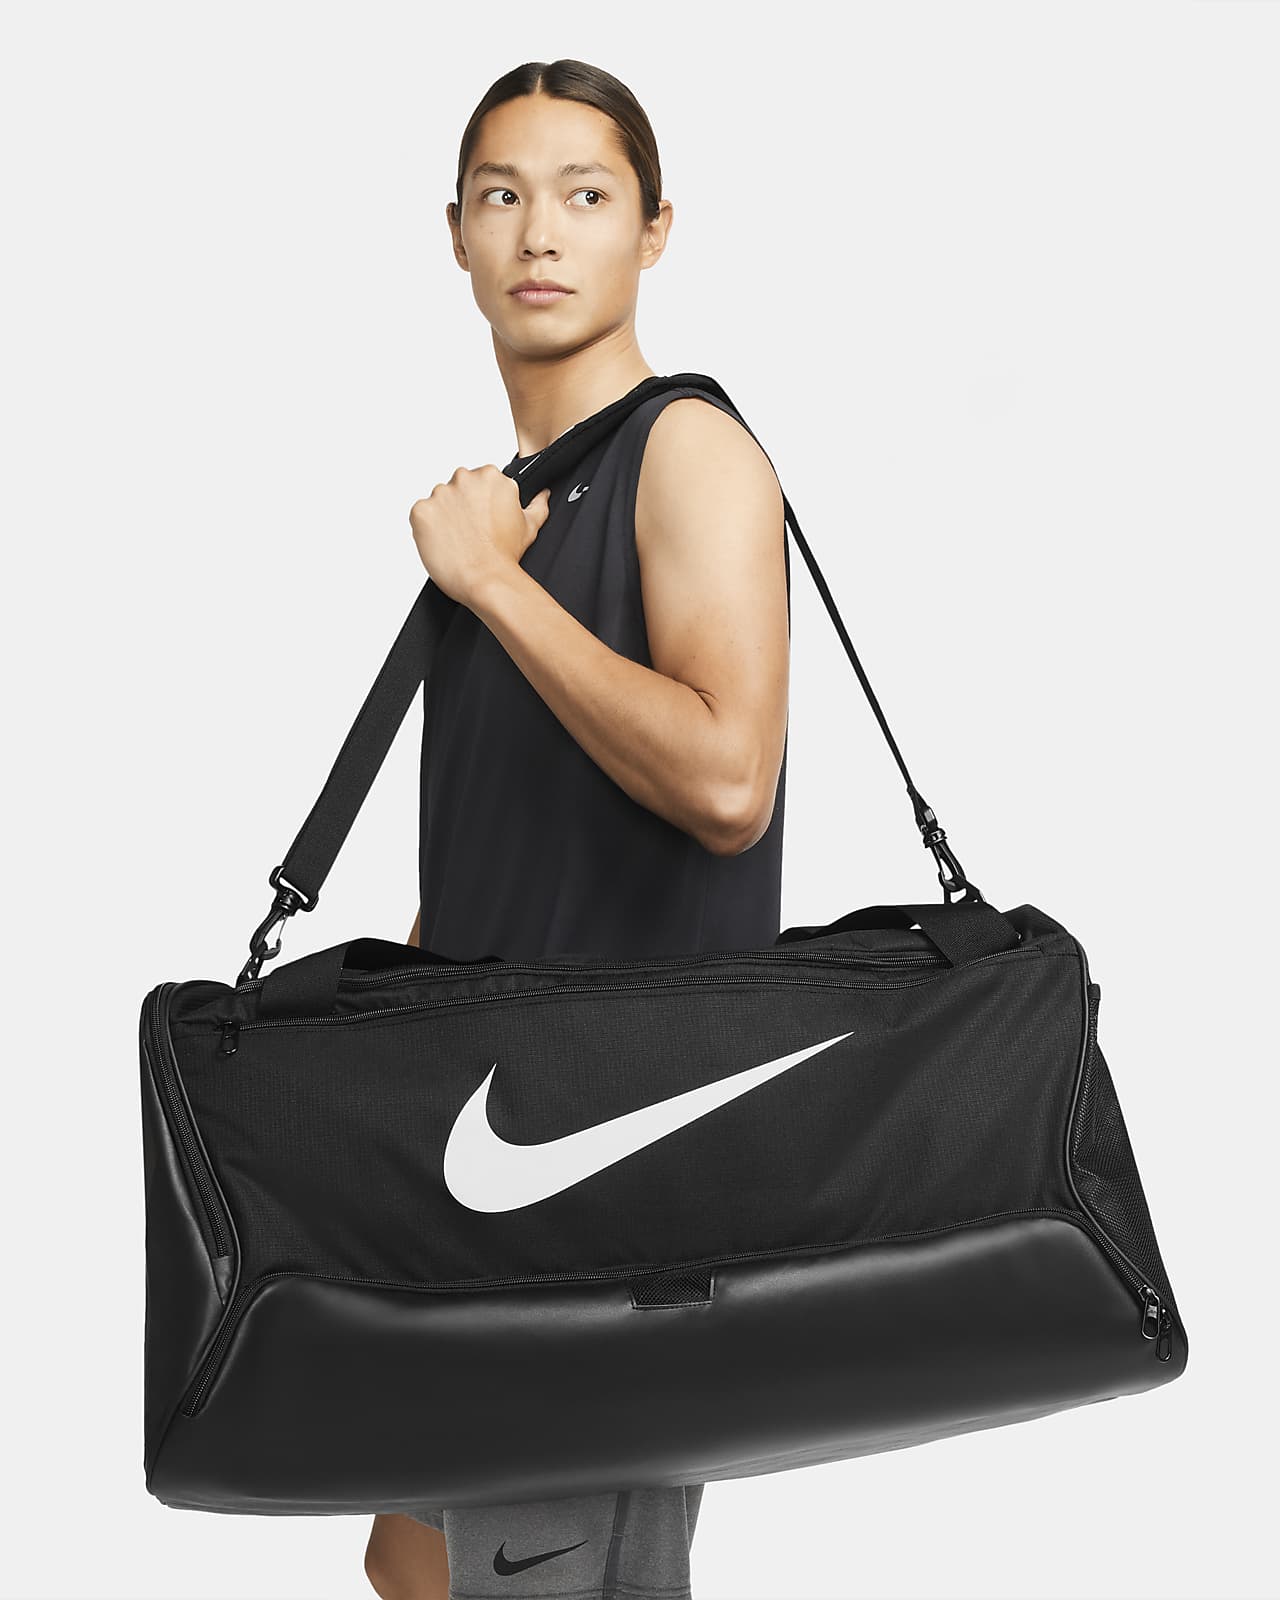 Bag Sneaker Women Shoe & Bag Set New | eBay